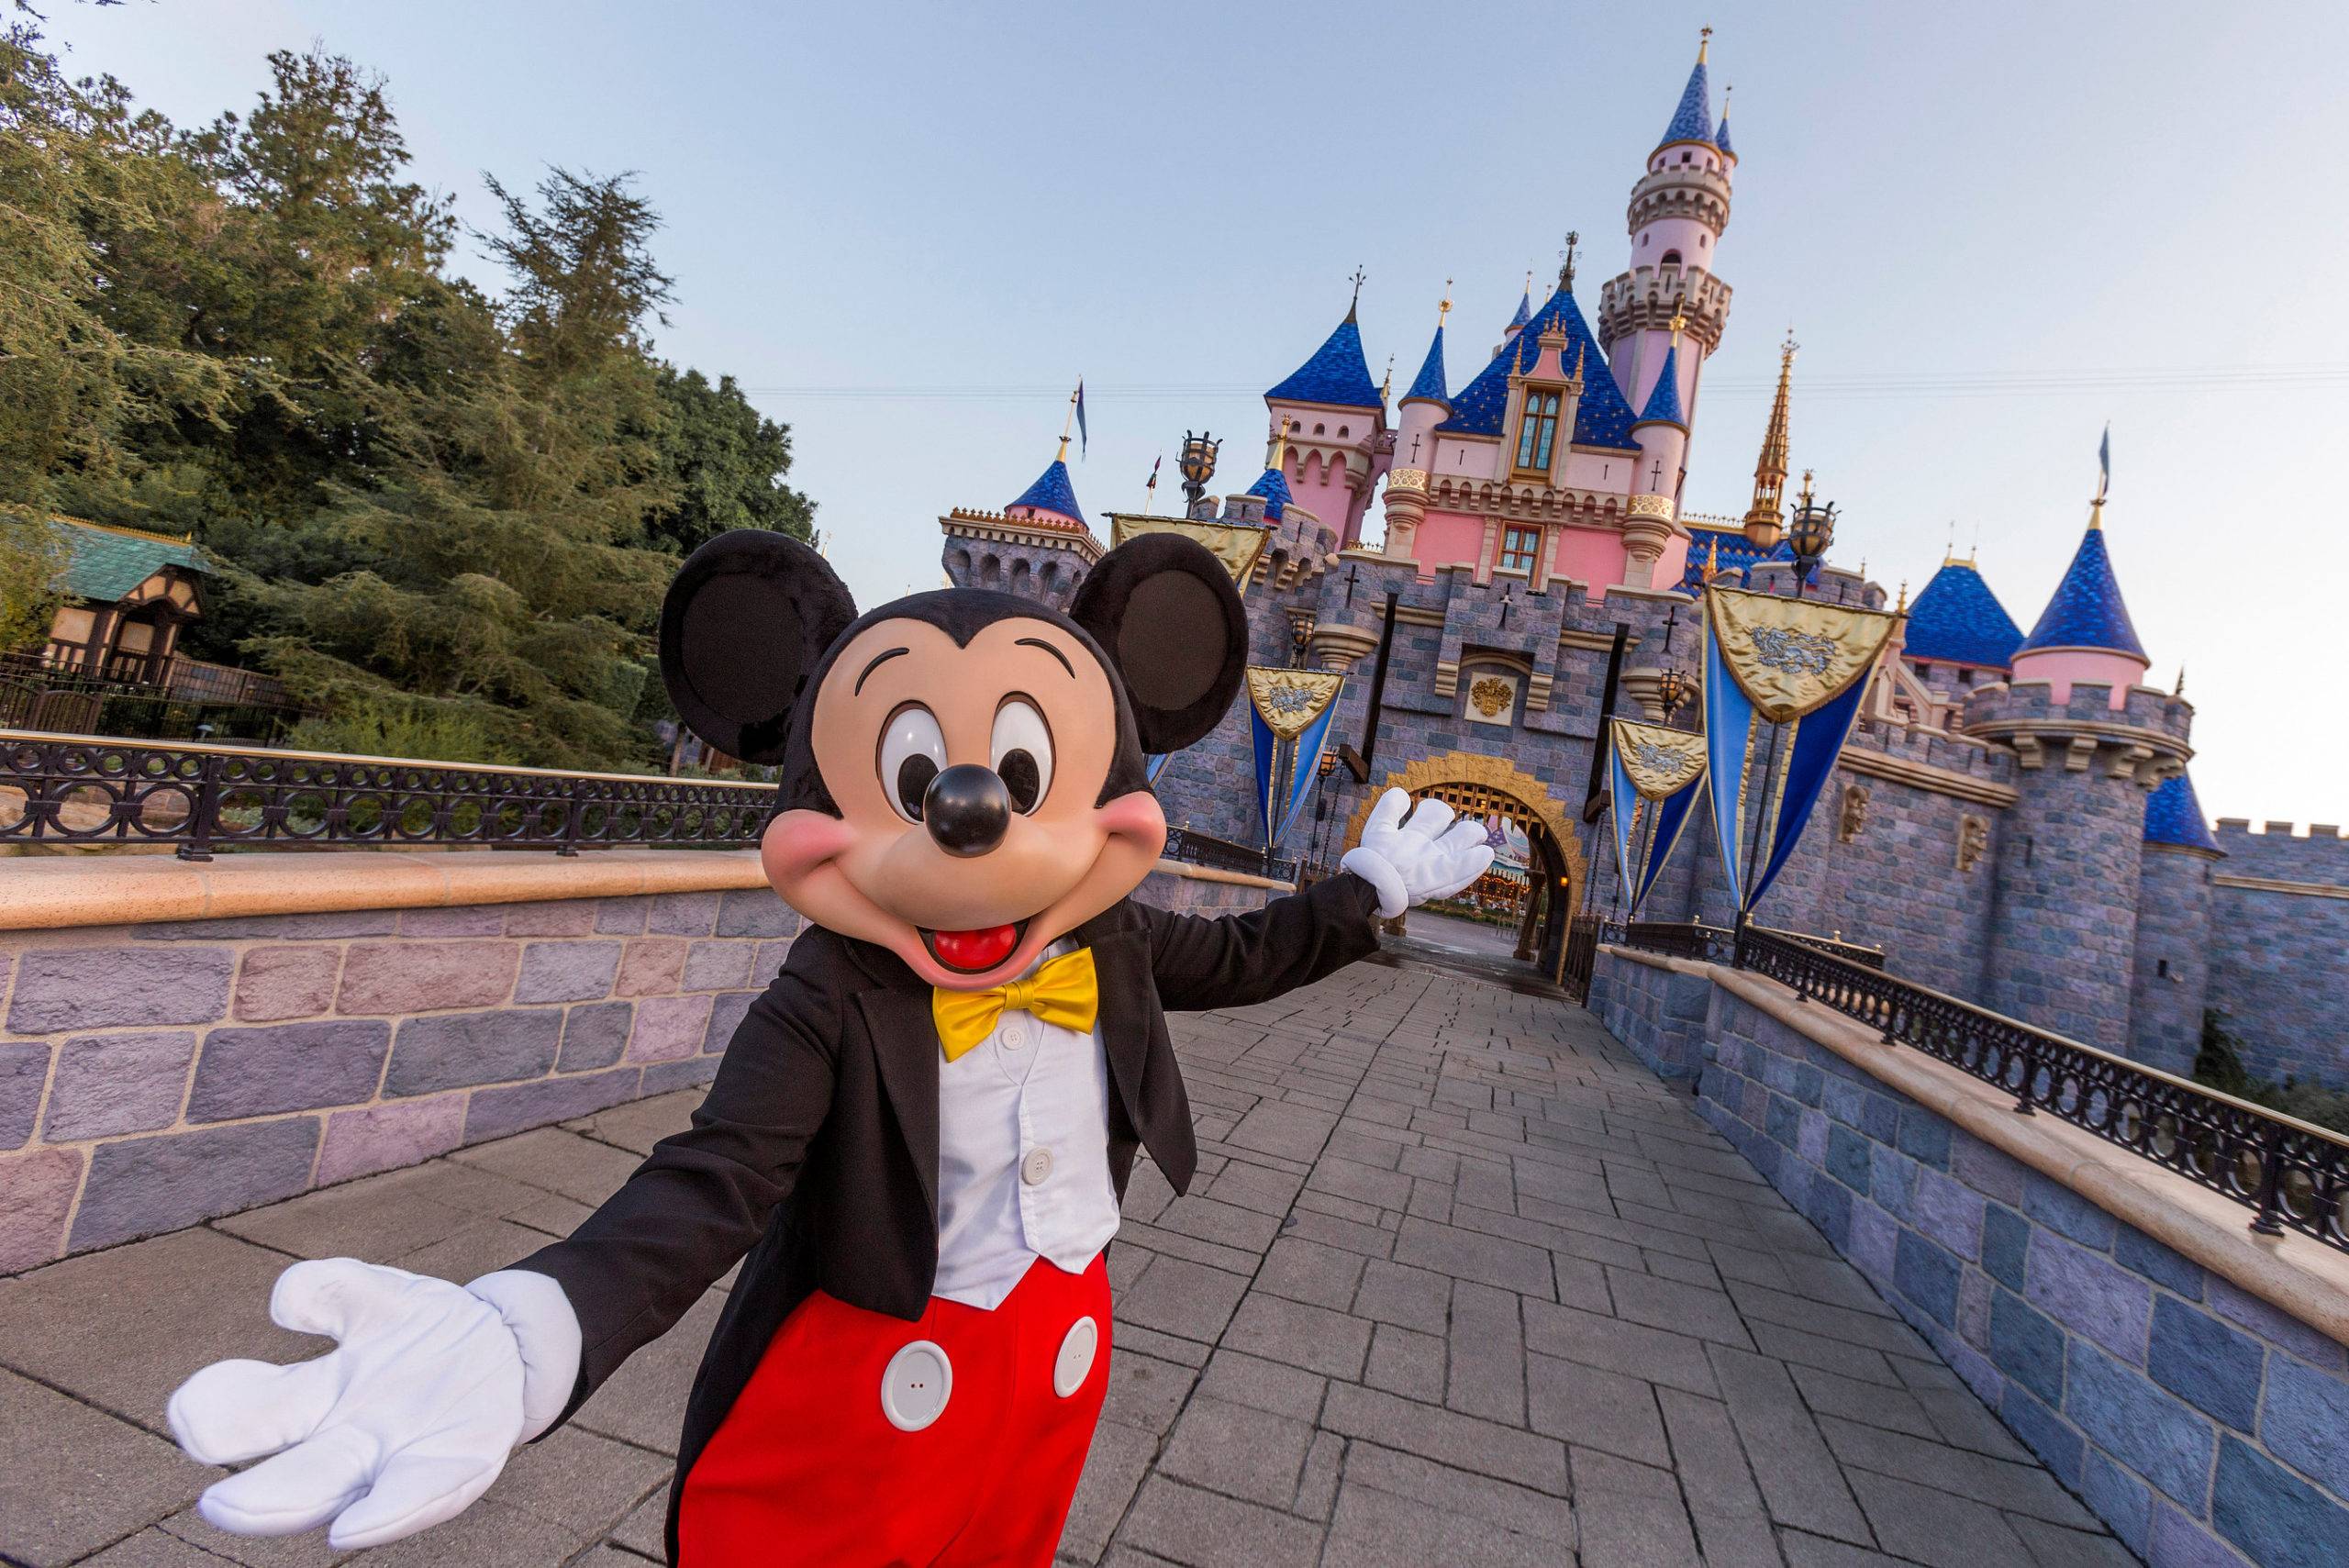 Both Disneyland Park and Disney California Adventure Park will reopen April 30